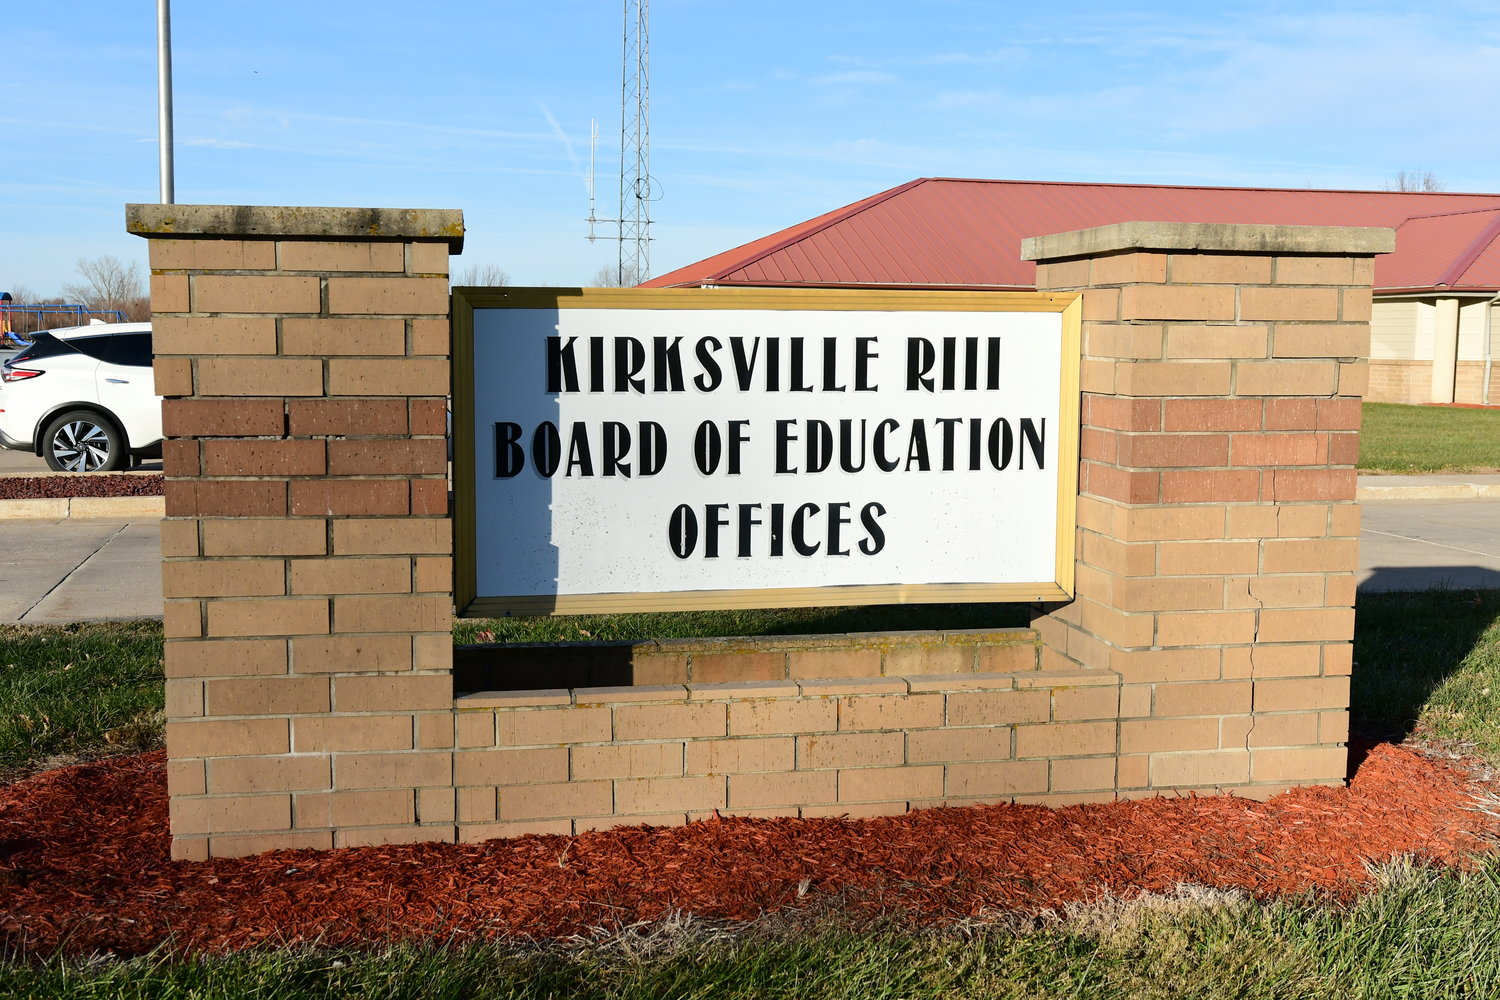 Kirksville R-III's administration office.